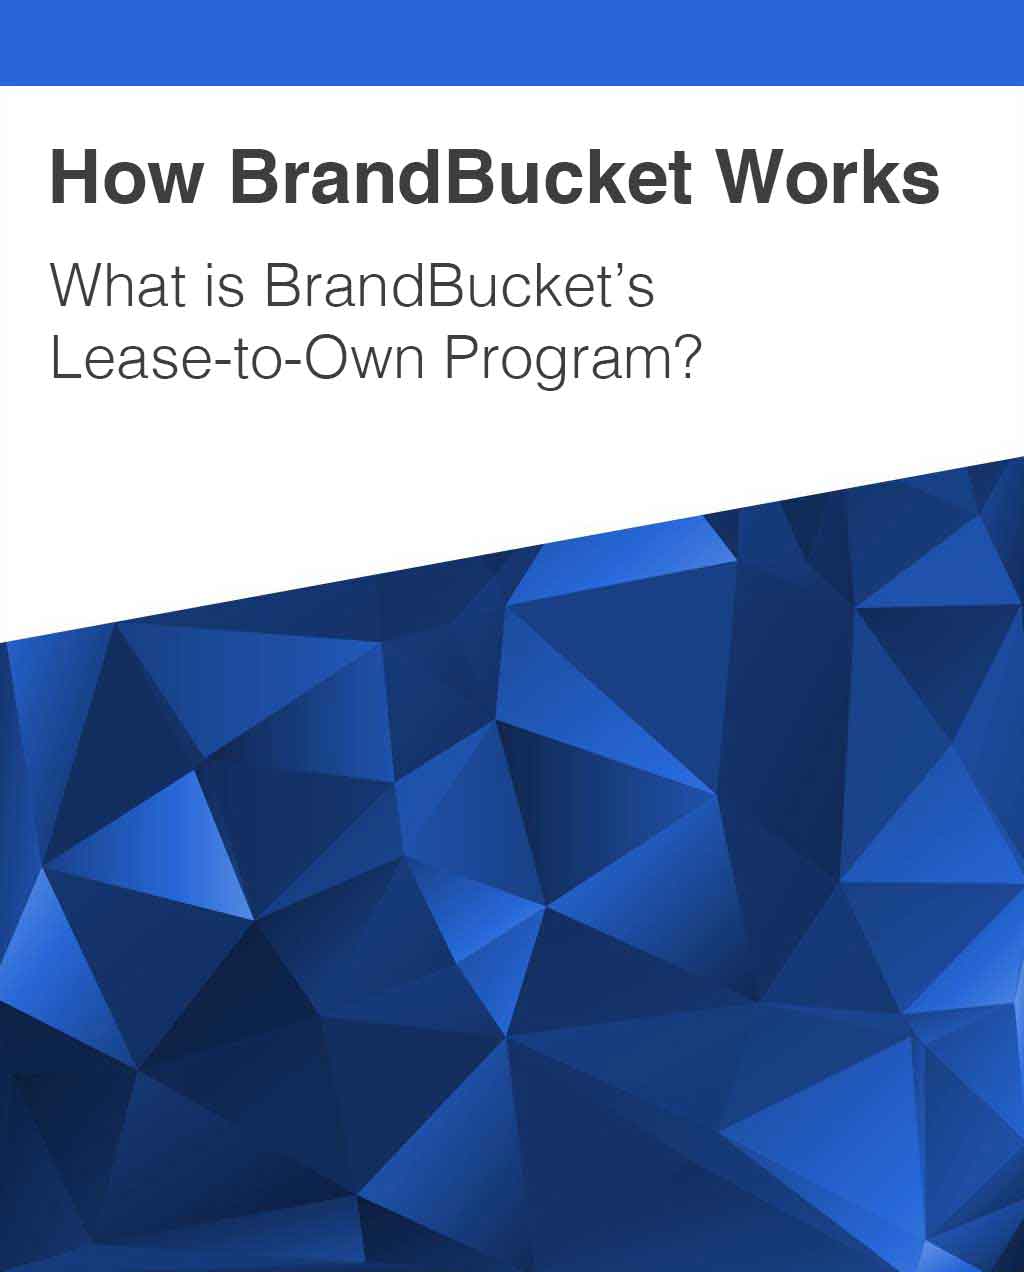 BrandBucket’s Lease-to-Own Program